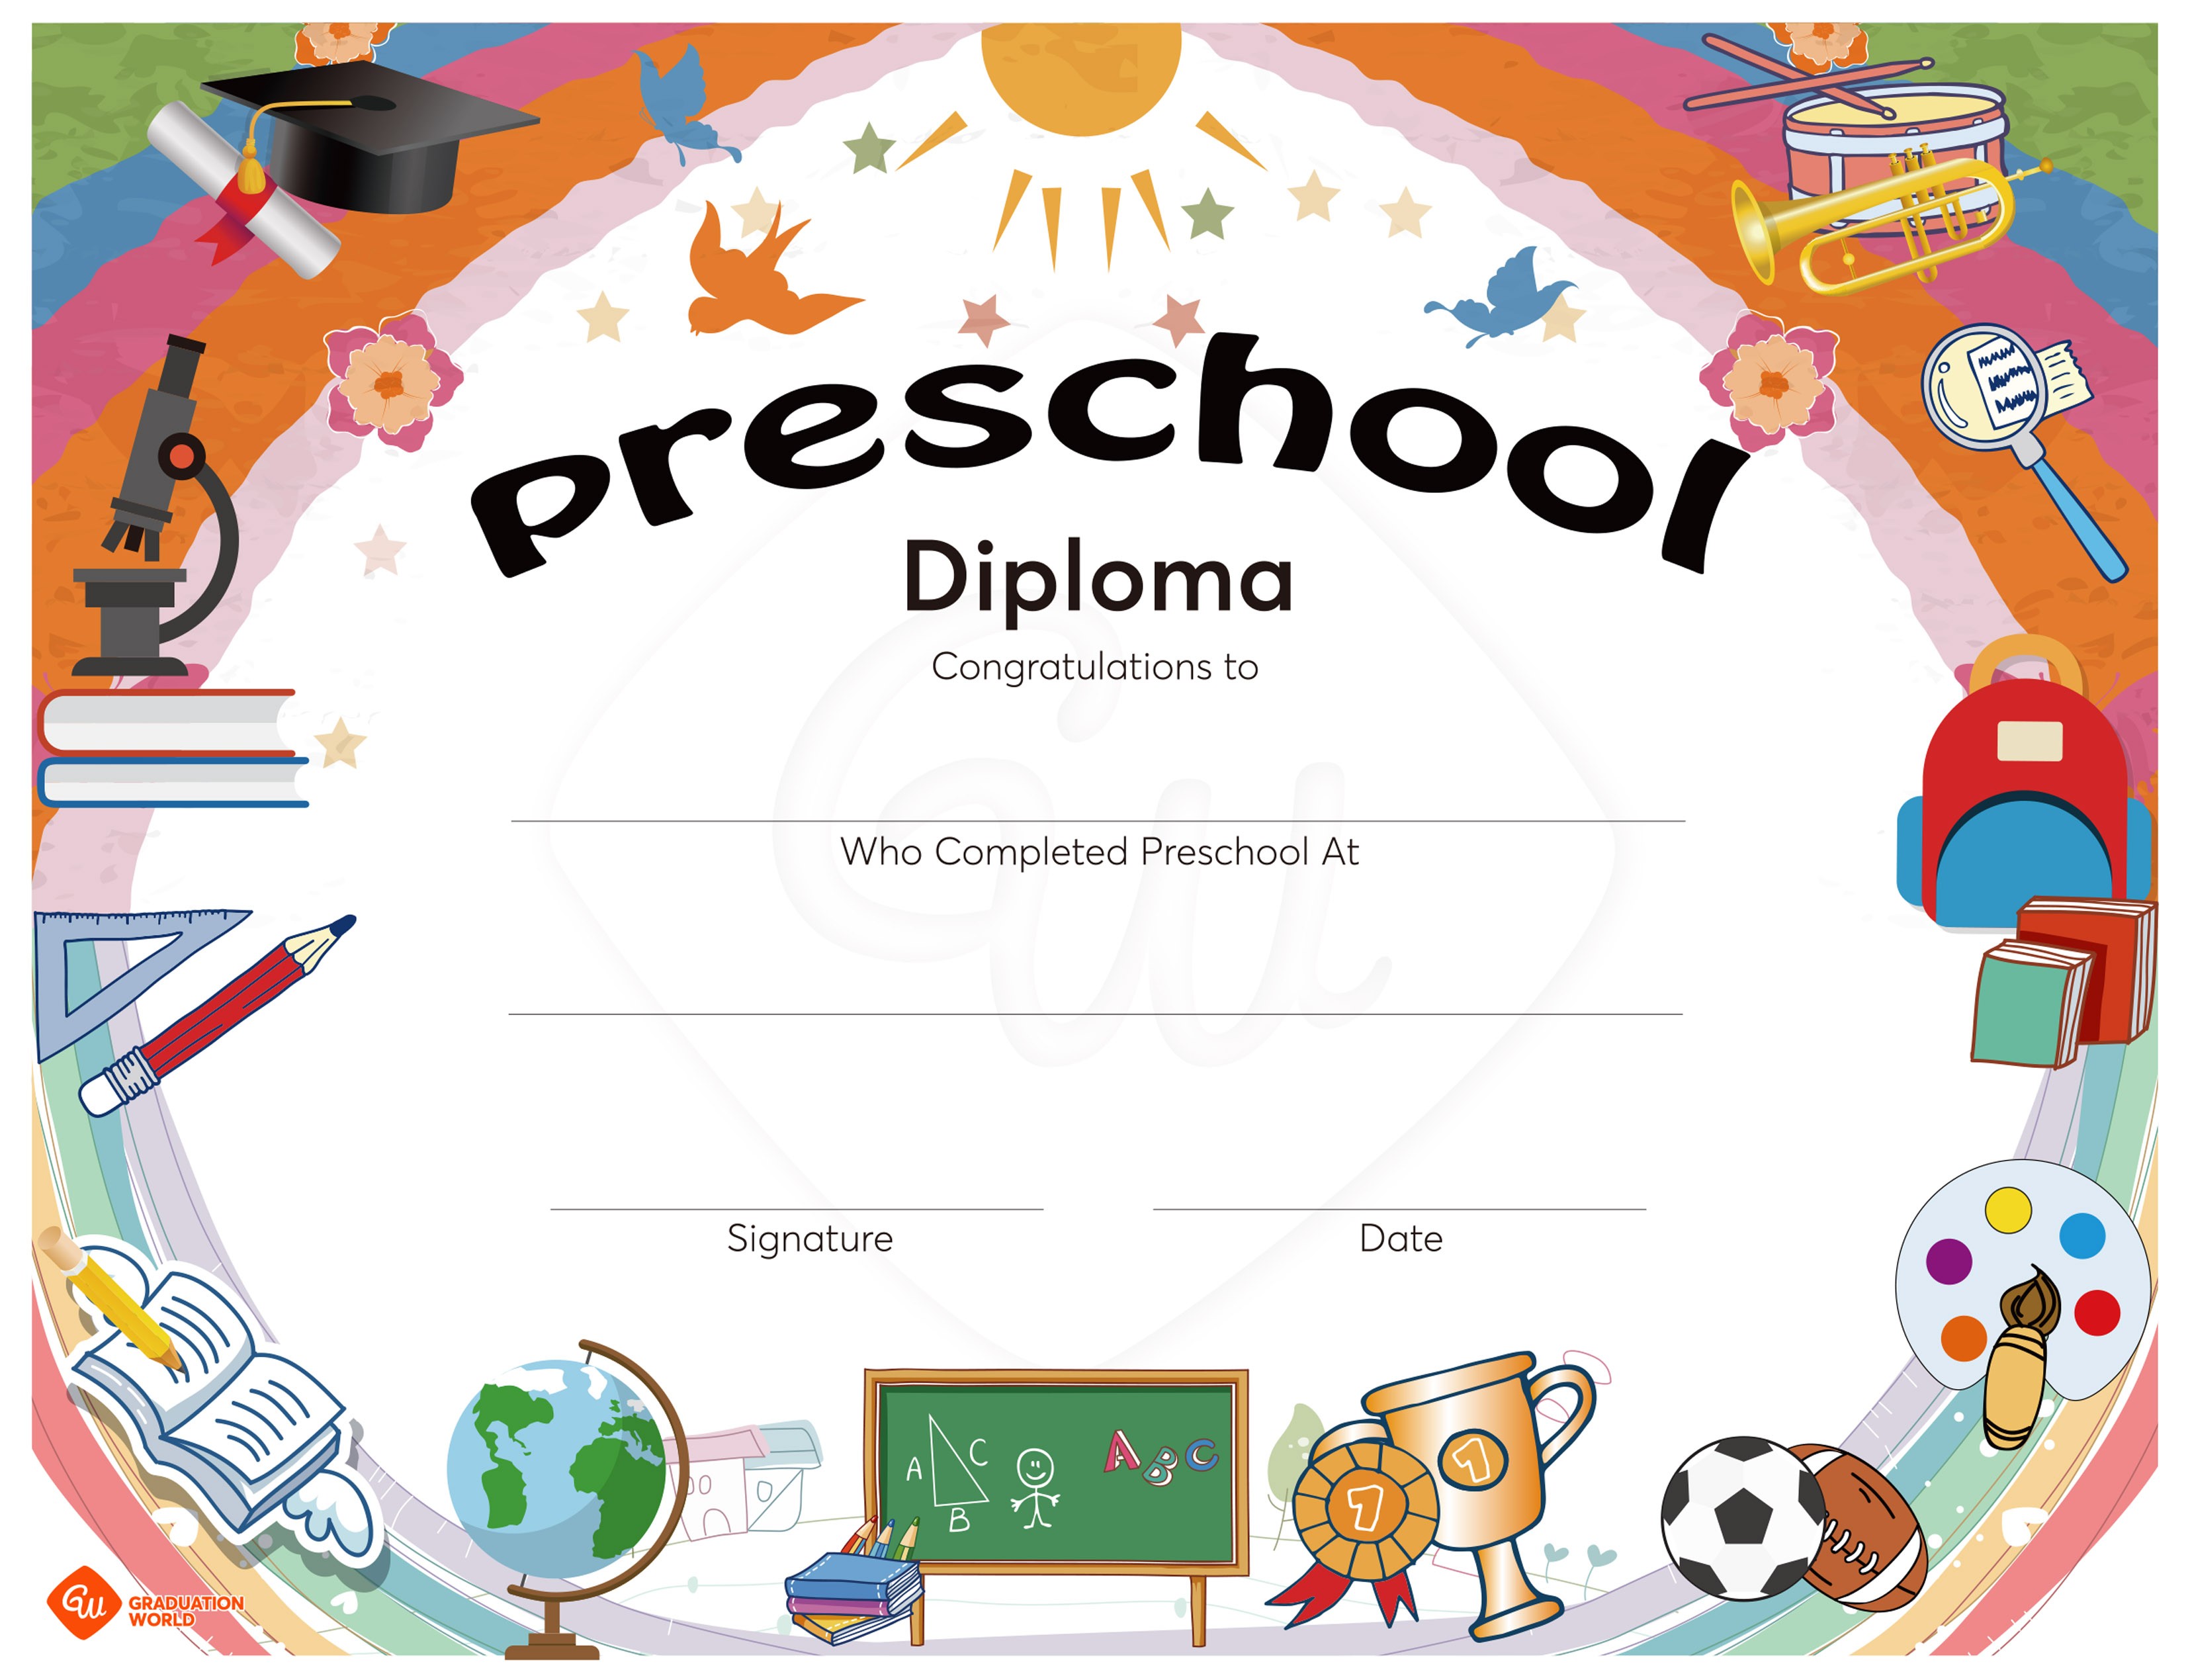 Preschool Diploma | Preschool Graduation Certificate